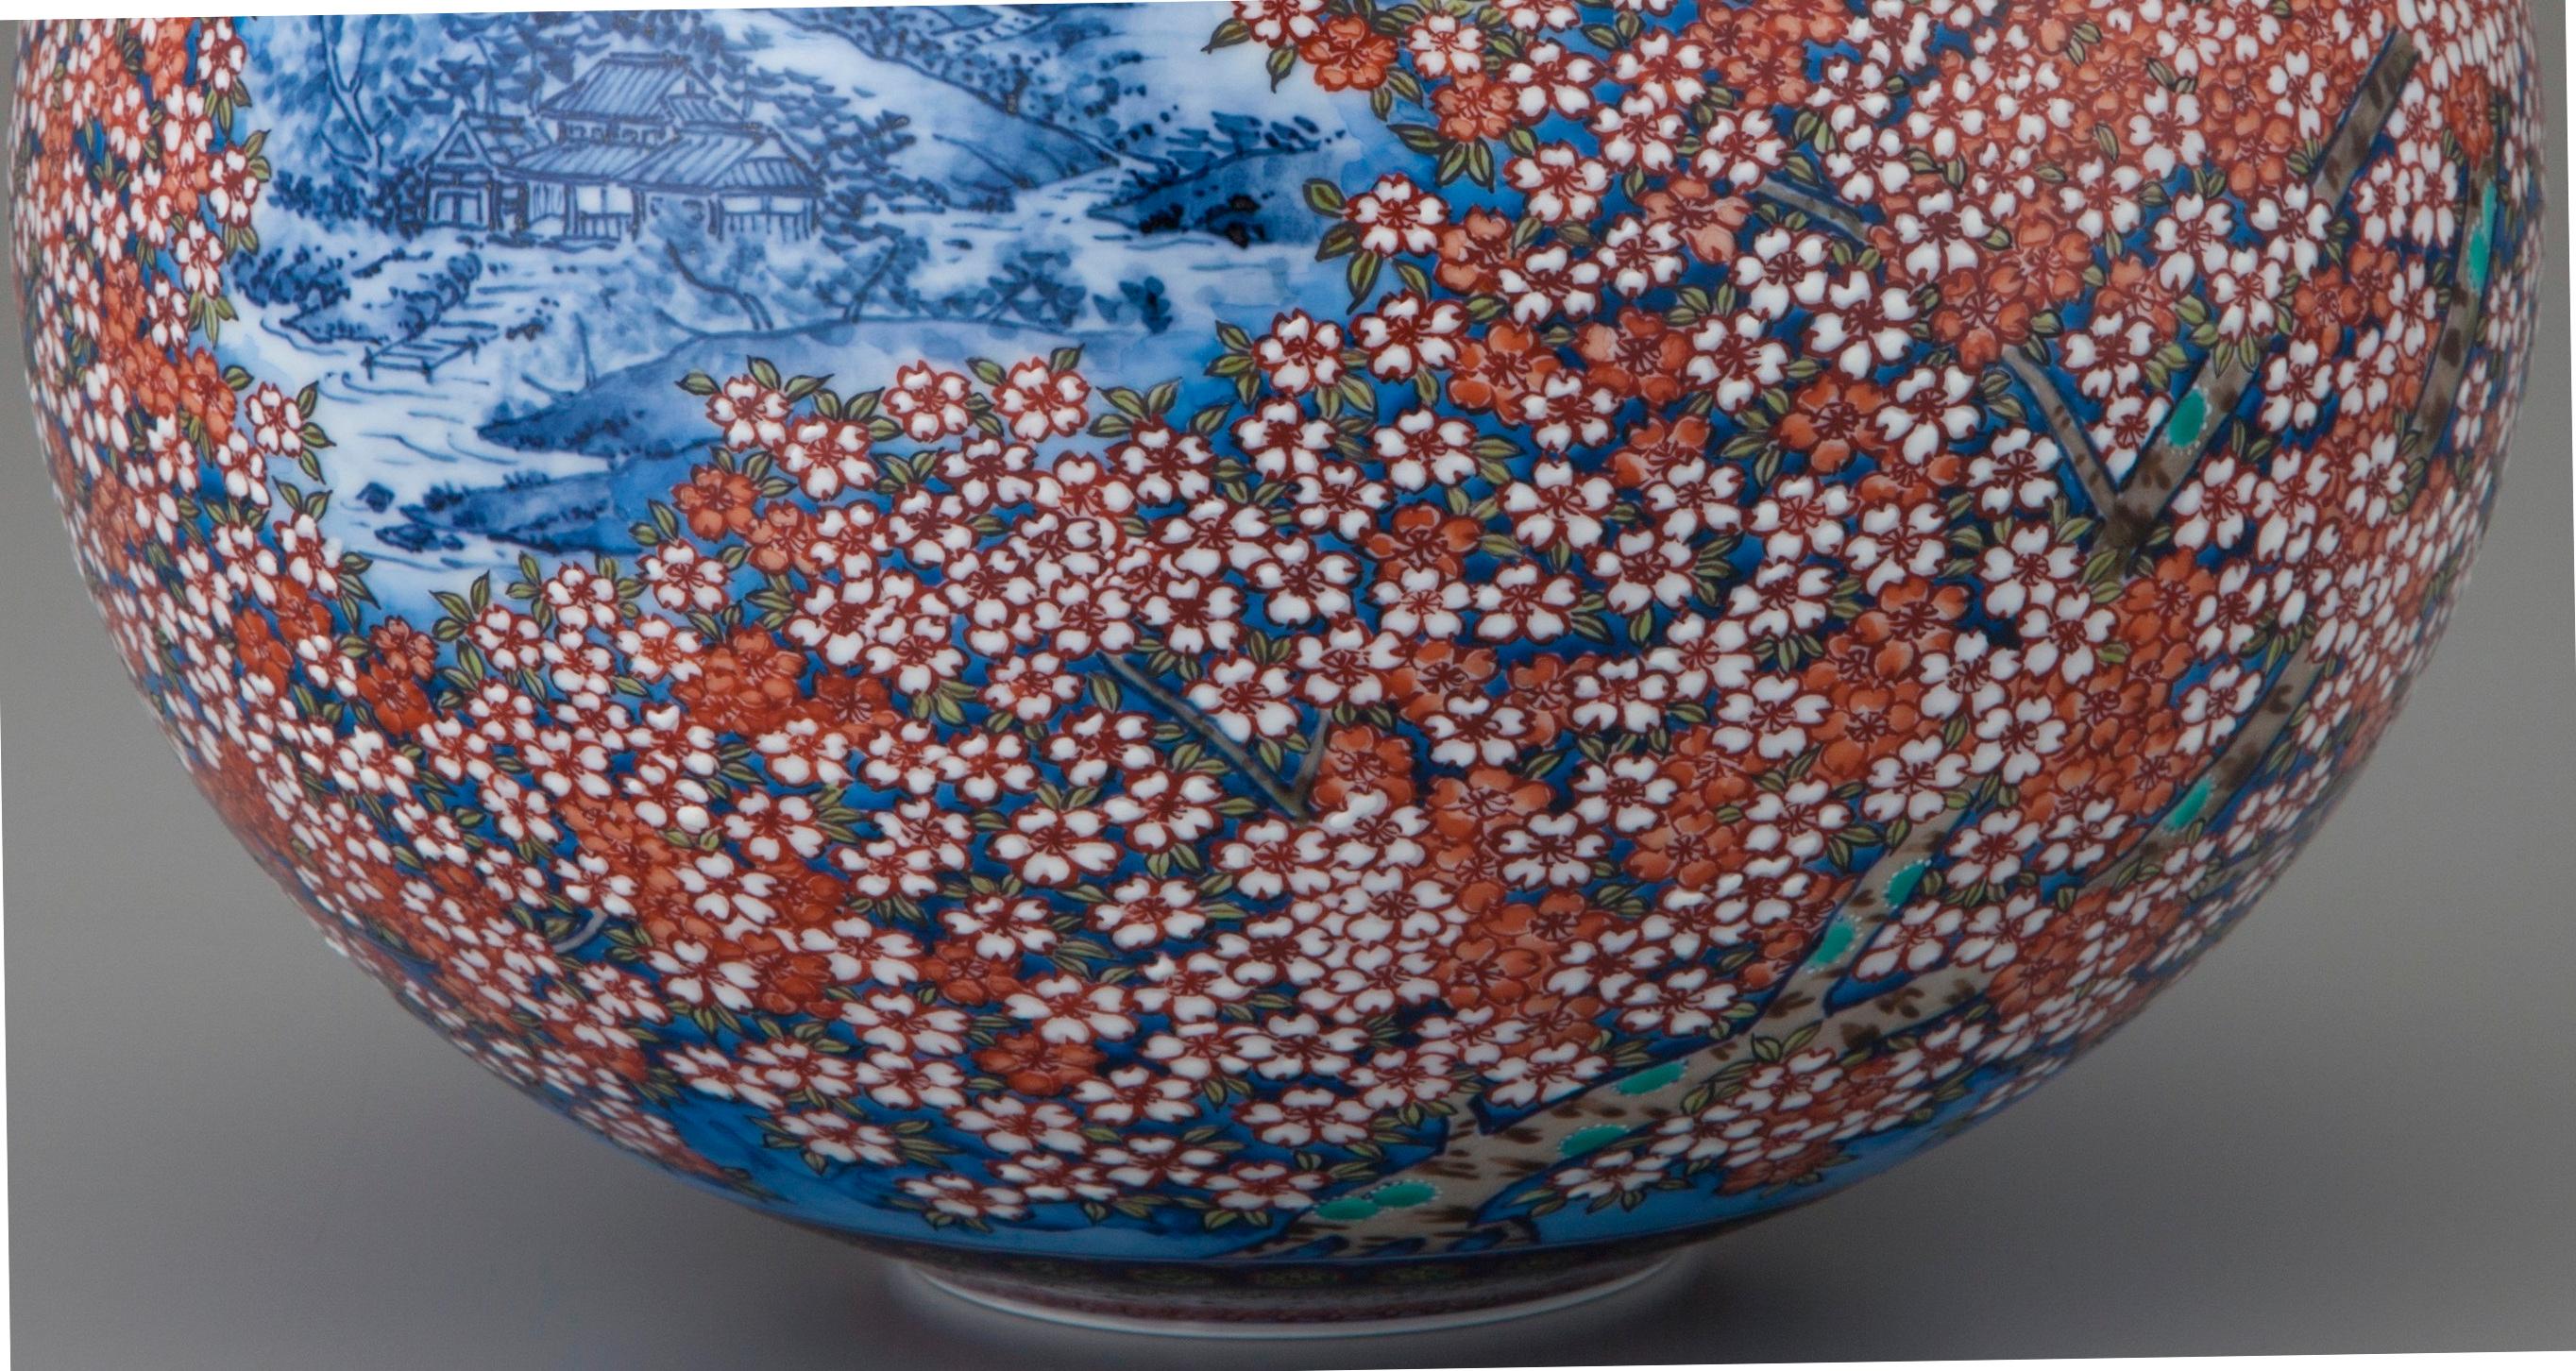 Contemporary Japanese Imari Hand Painted Decorative Porcelain Vase by Master Artist, 2018